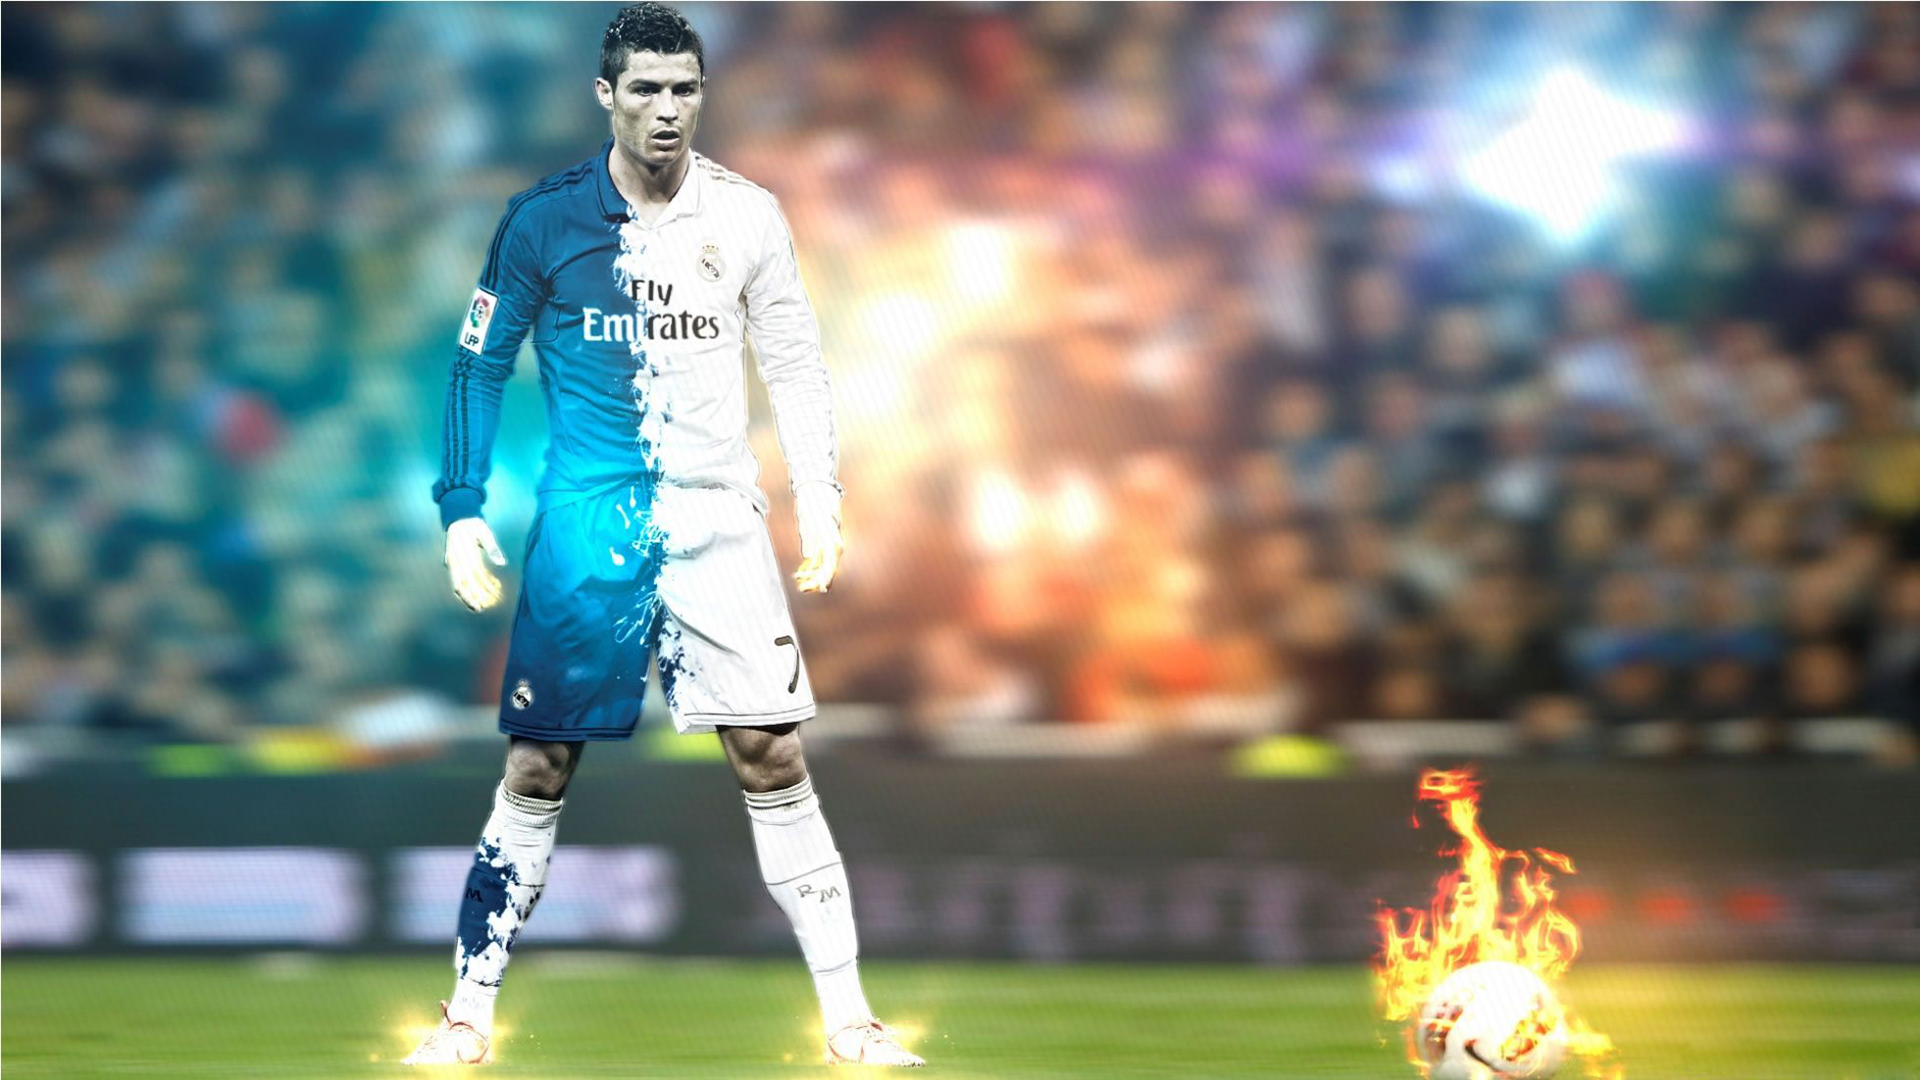 Free Ronaldo Wallpaper Downloads 400 Ronaldo Wallpapers for FREE   Wallpaperscom